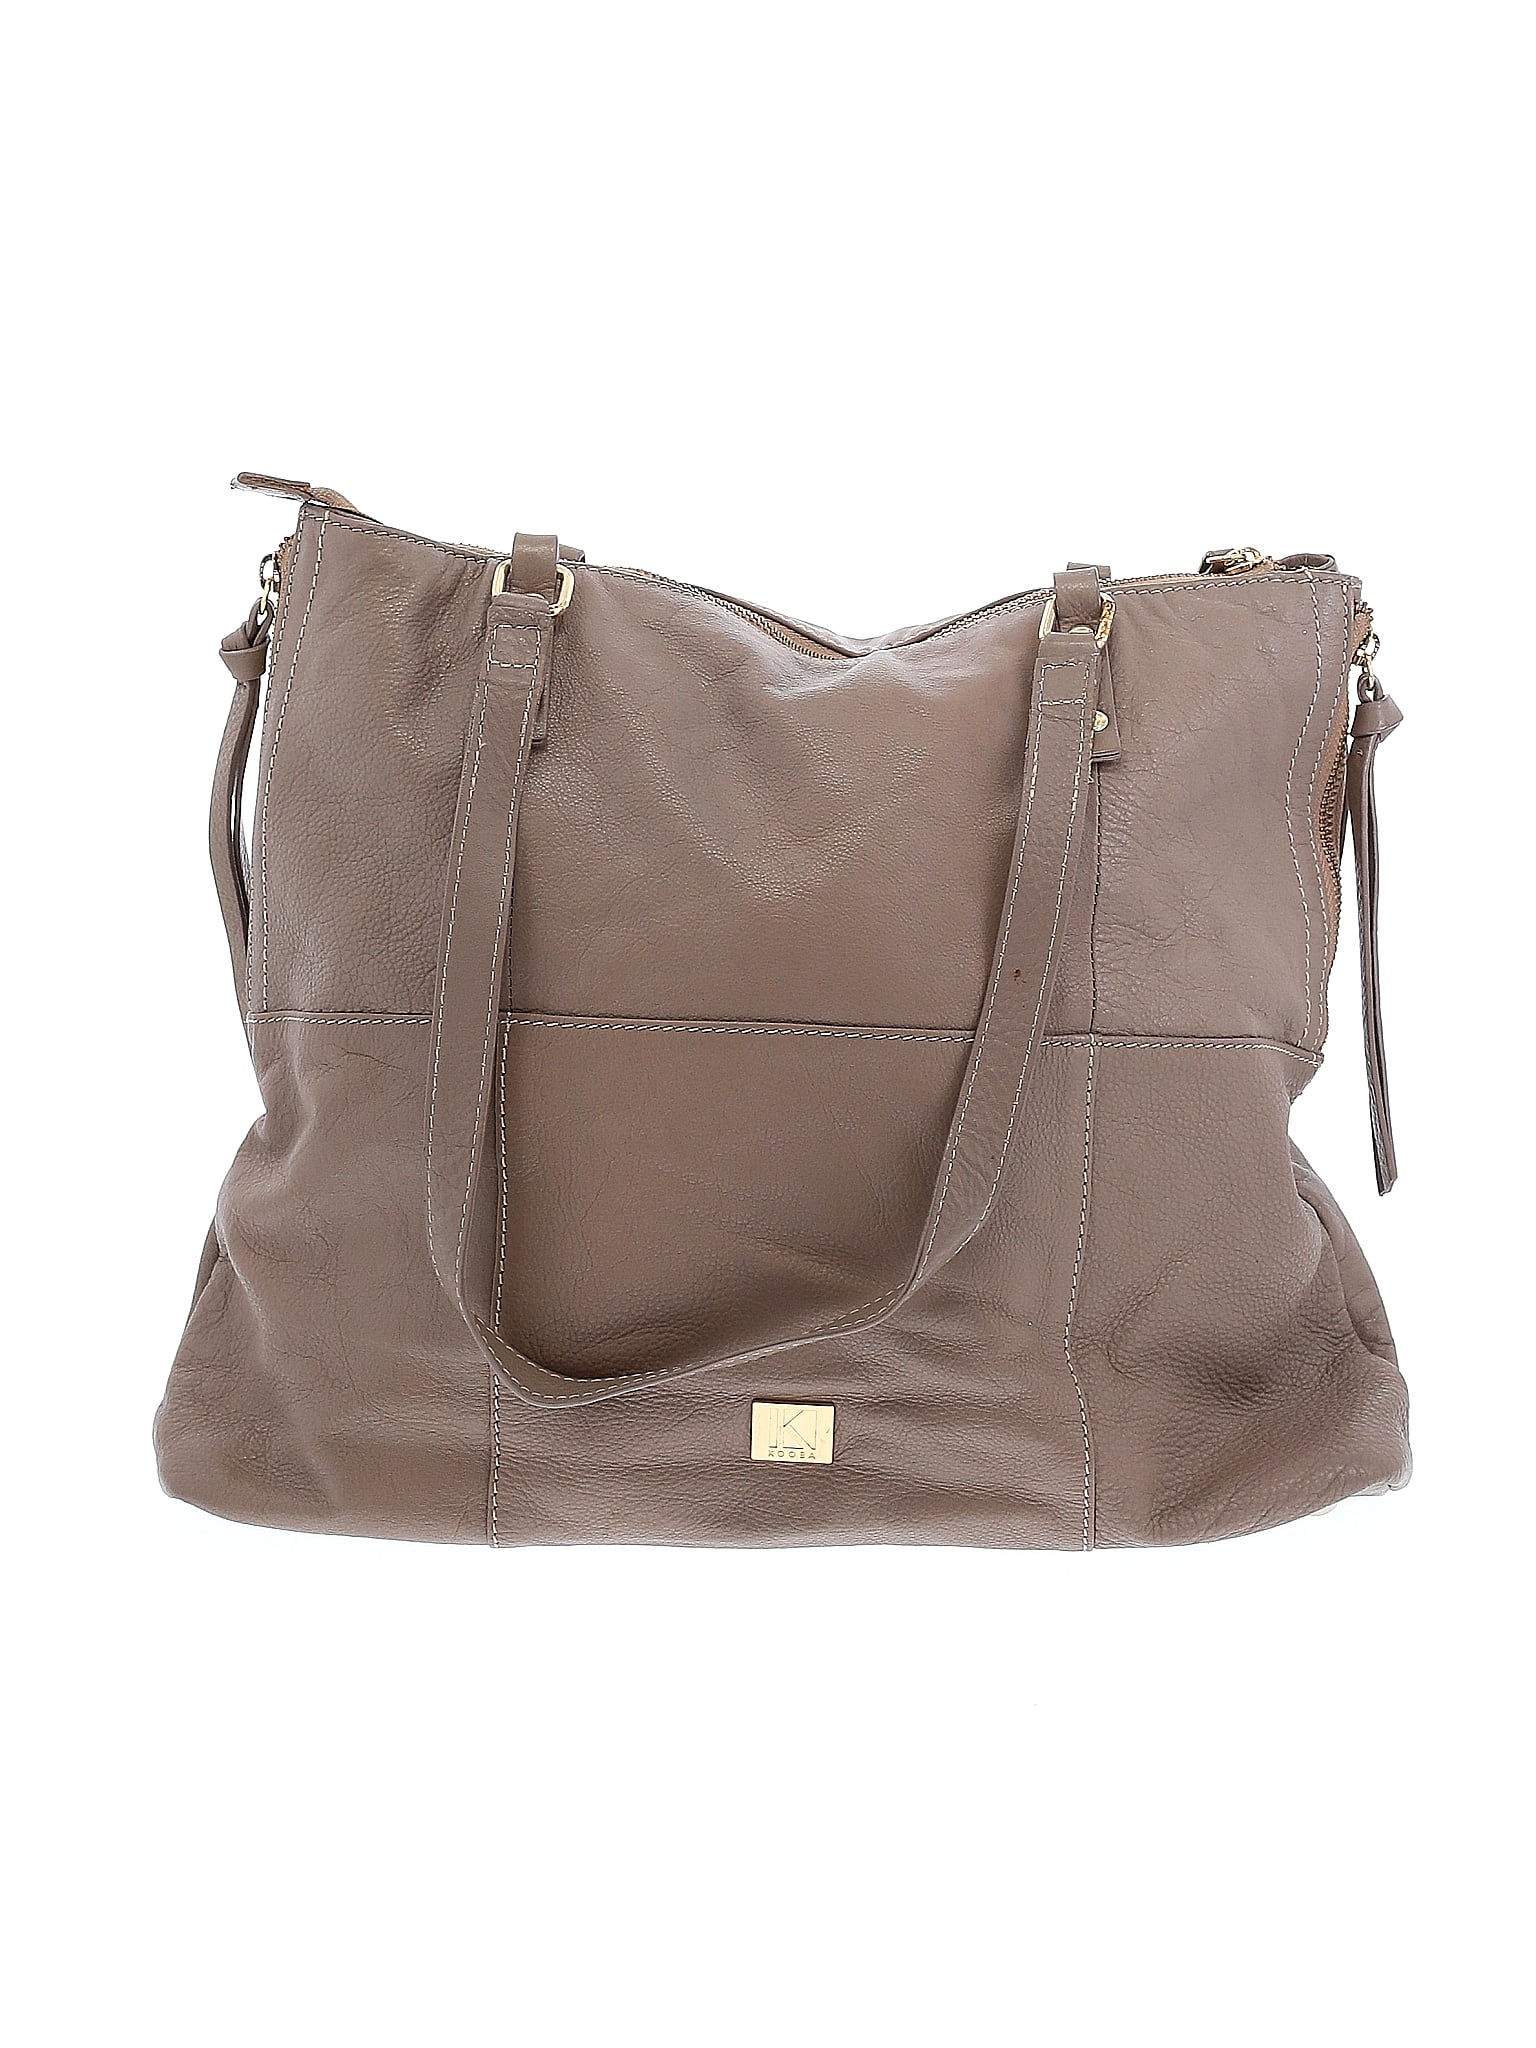 Kooba Tan Leather Handbag